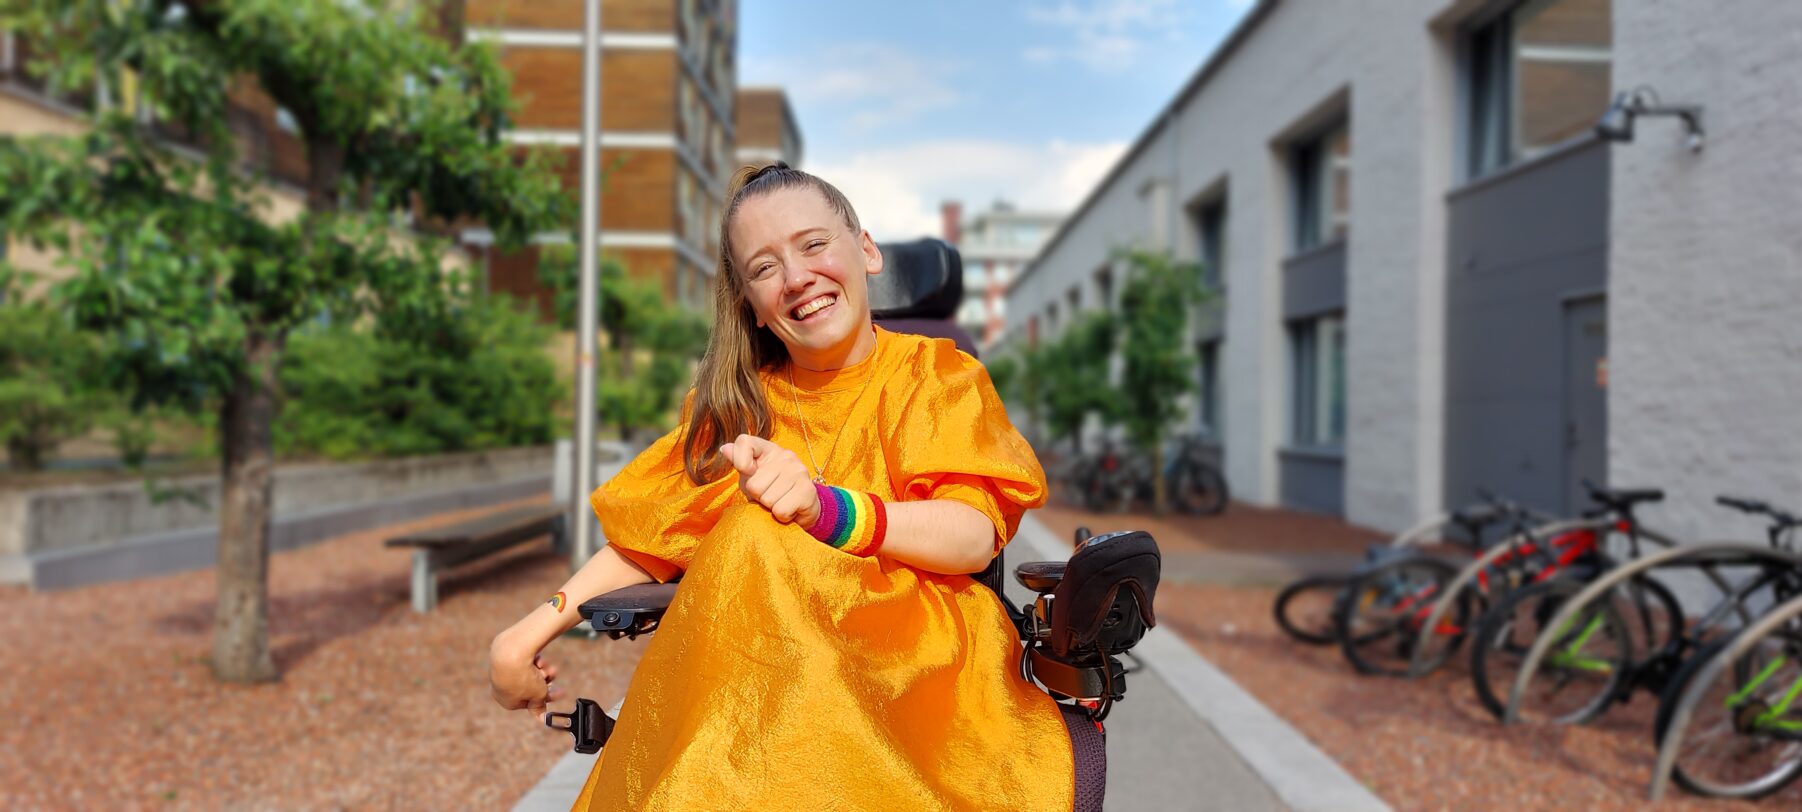 Ida Hauge Dignes i rullestol i gatemiljø, smiler mot kamera.